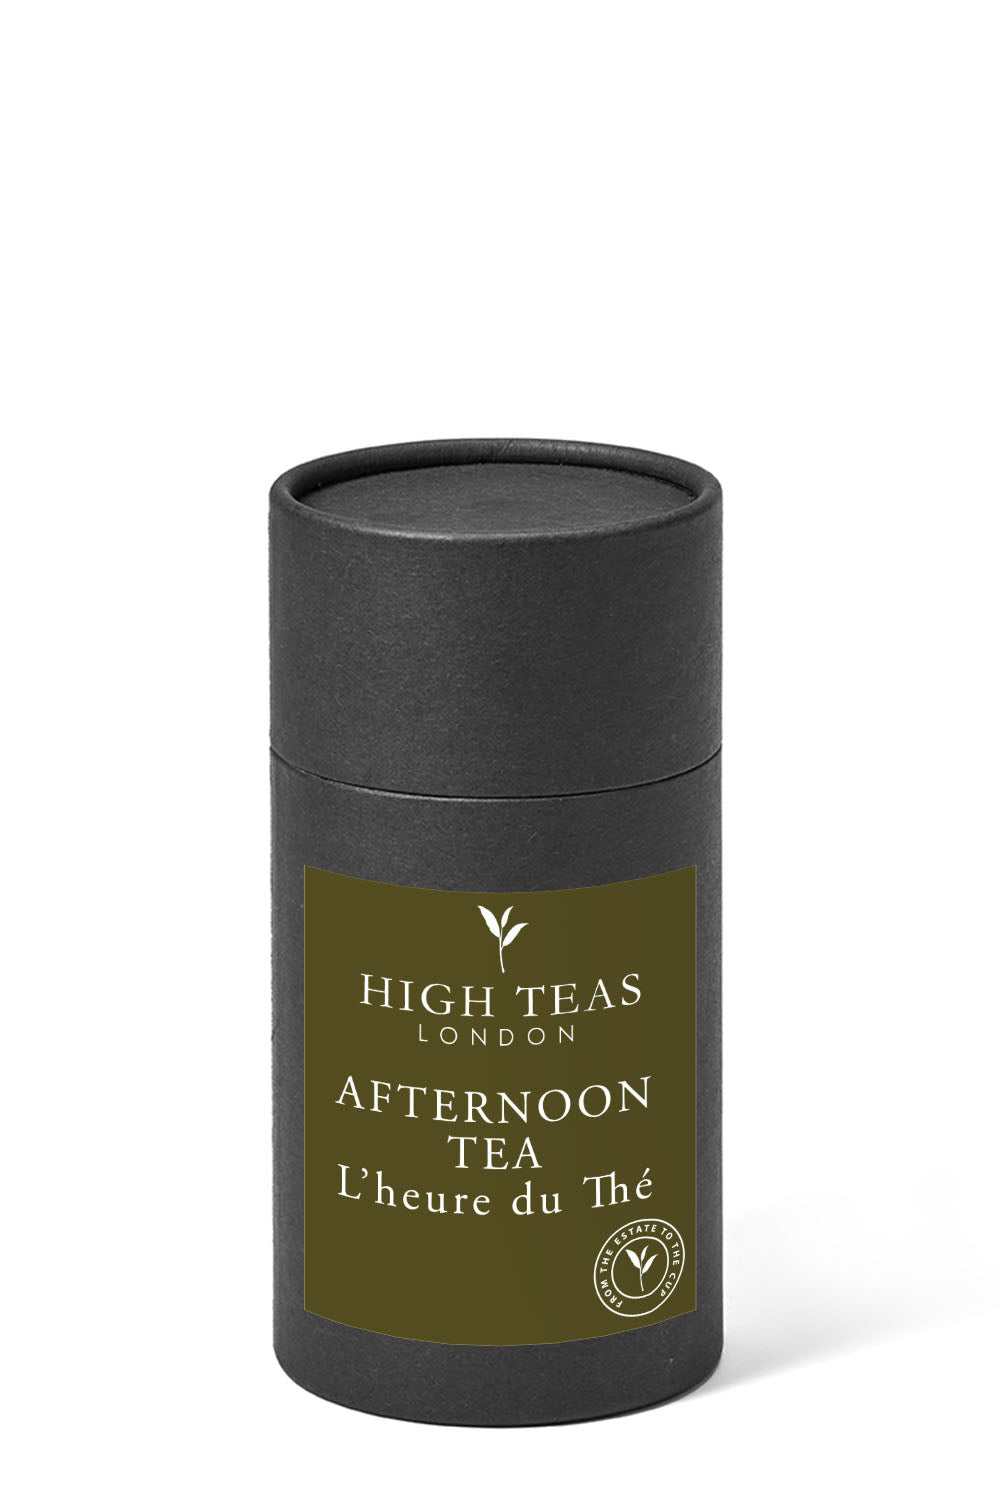 French Afternoon Tea, aka L'Heure du Thé.-60g gift-Loose Leaf Tea-High Teas